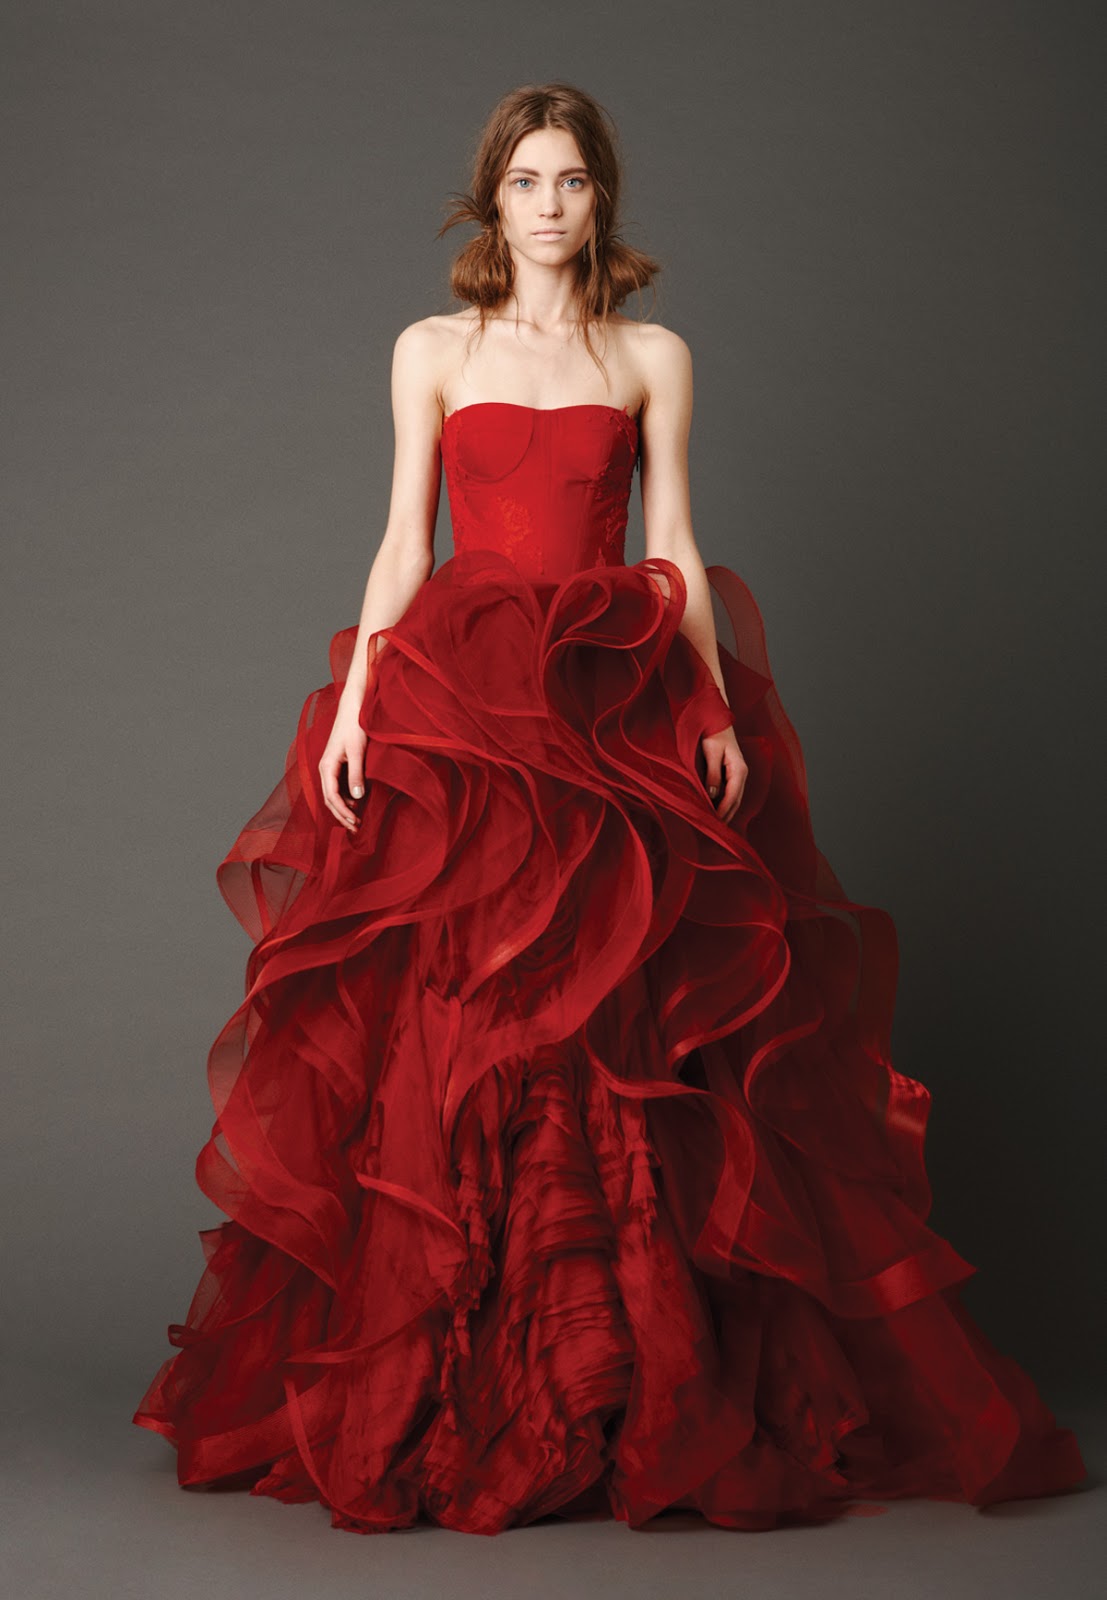 Red Ball Gown Wedding Dress